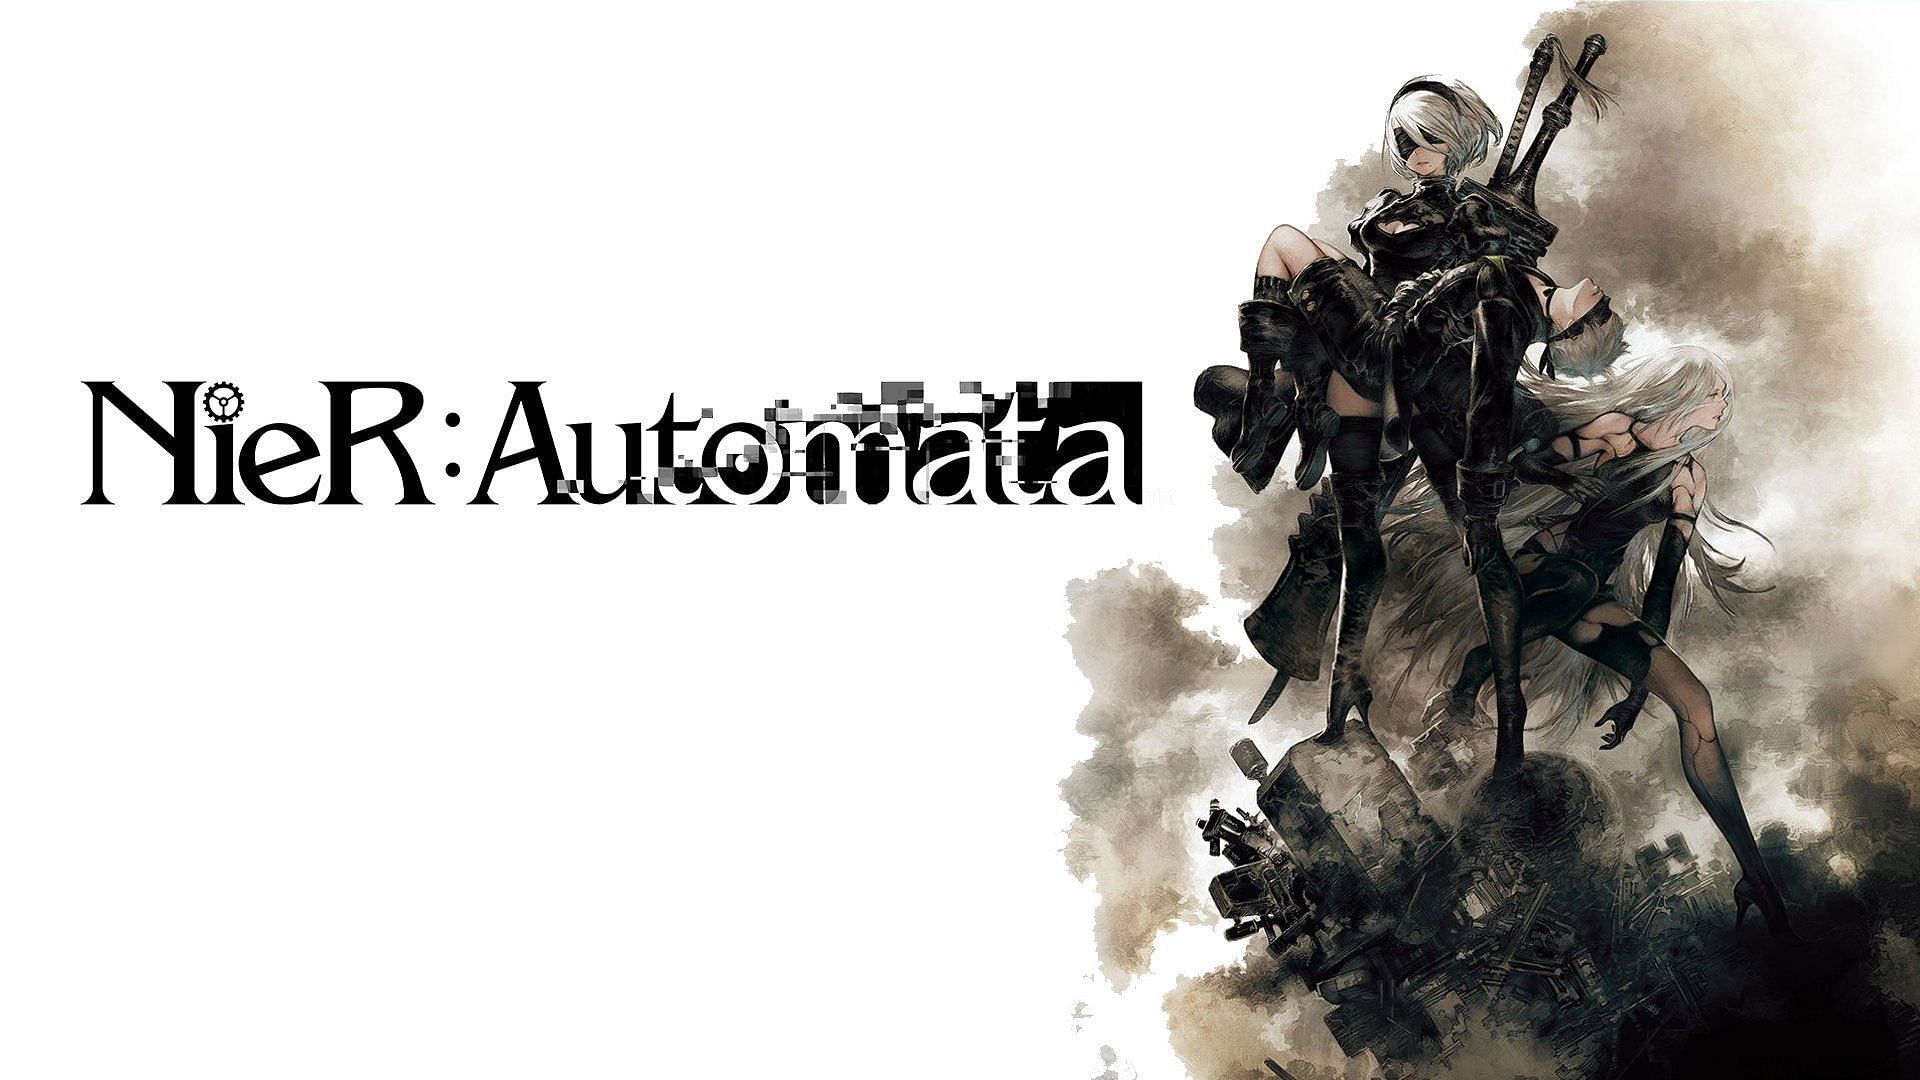 The logo for the Automata video game (Image via Square Enix)